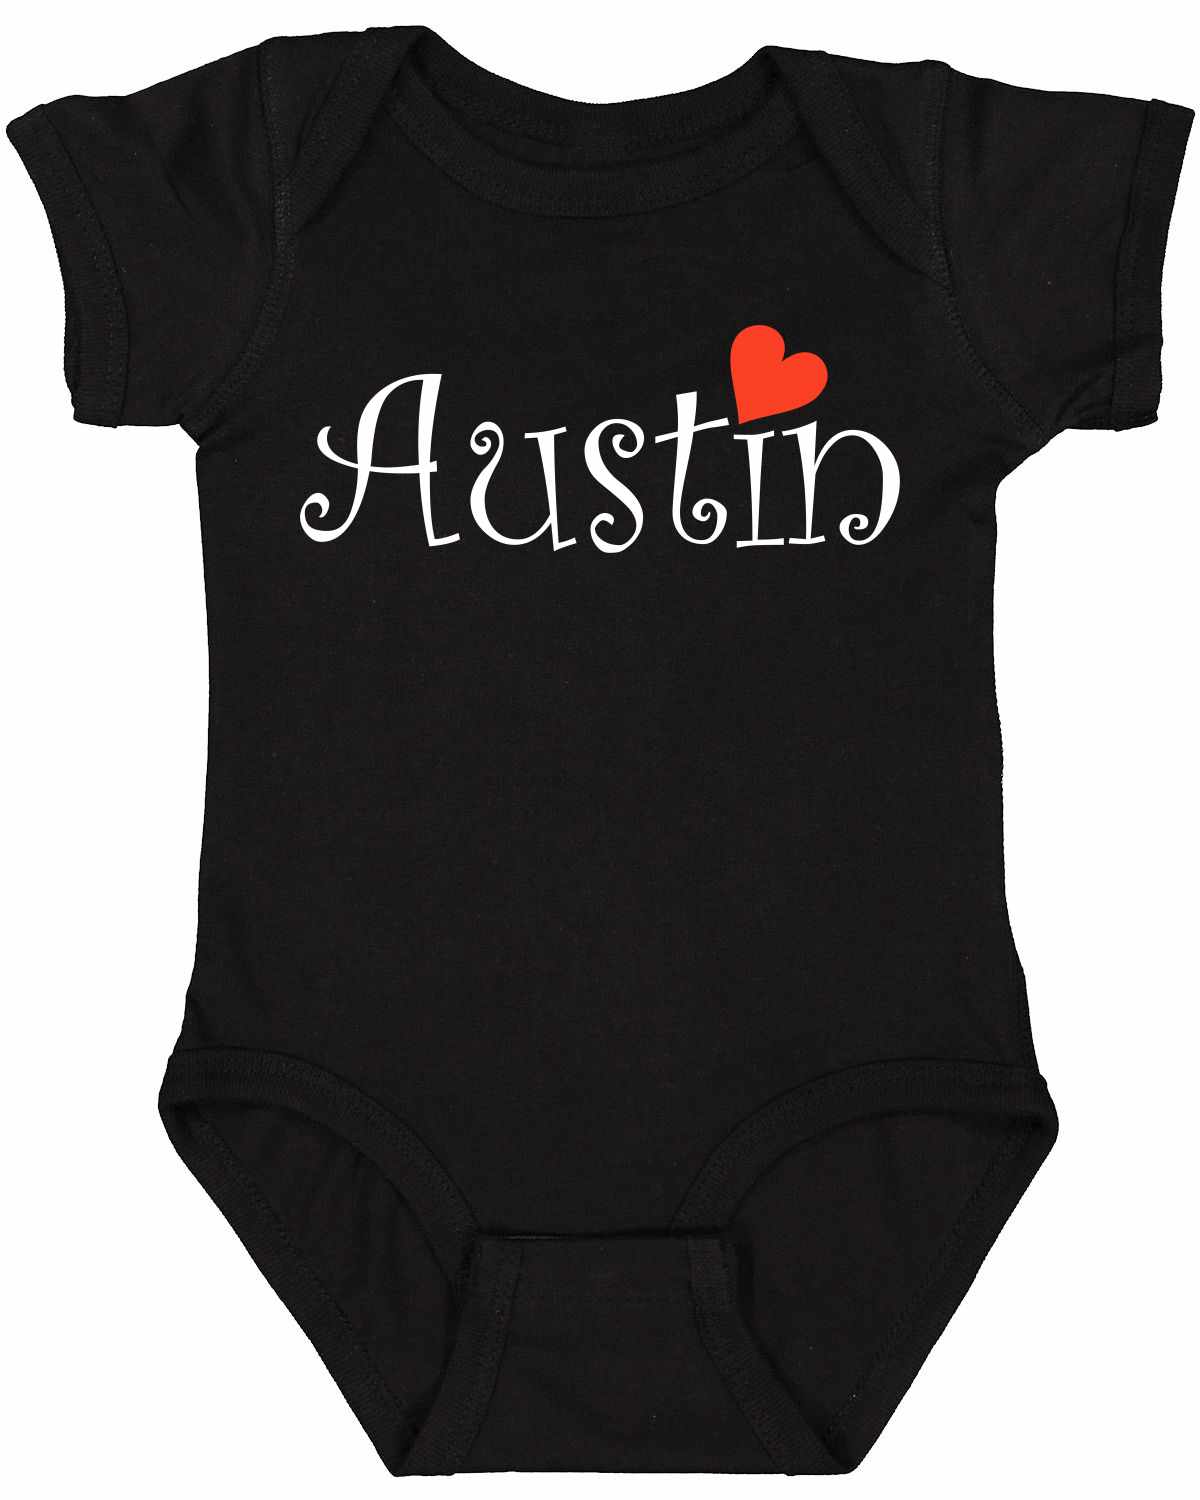 Austin City on Infant BodySuit